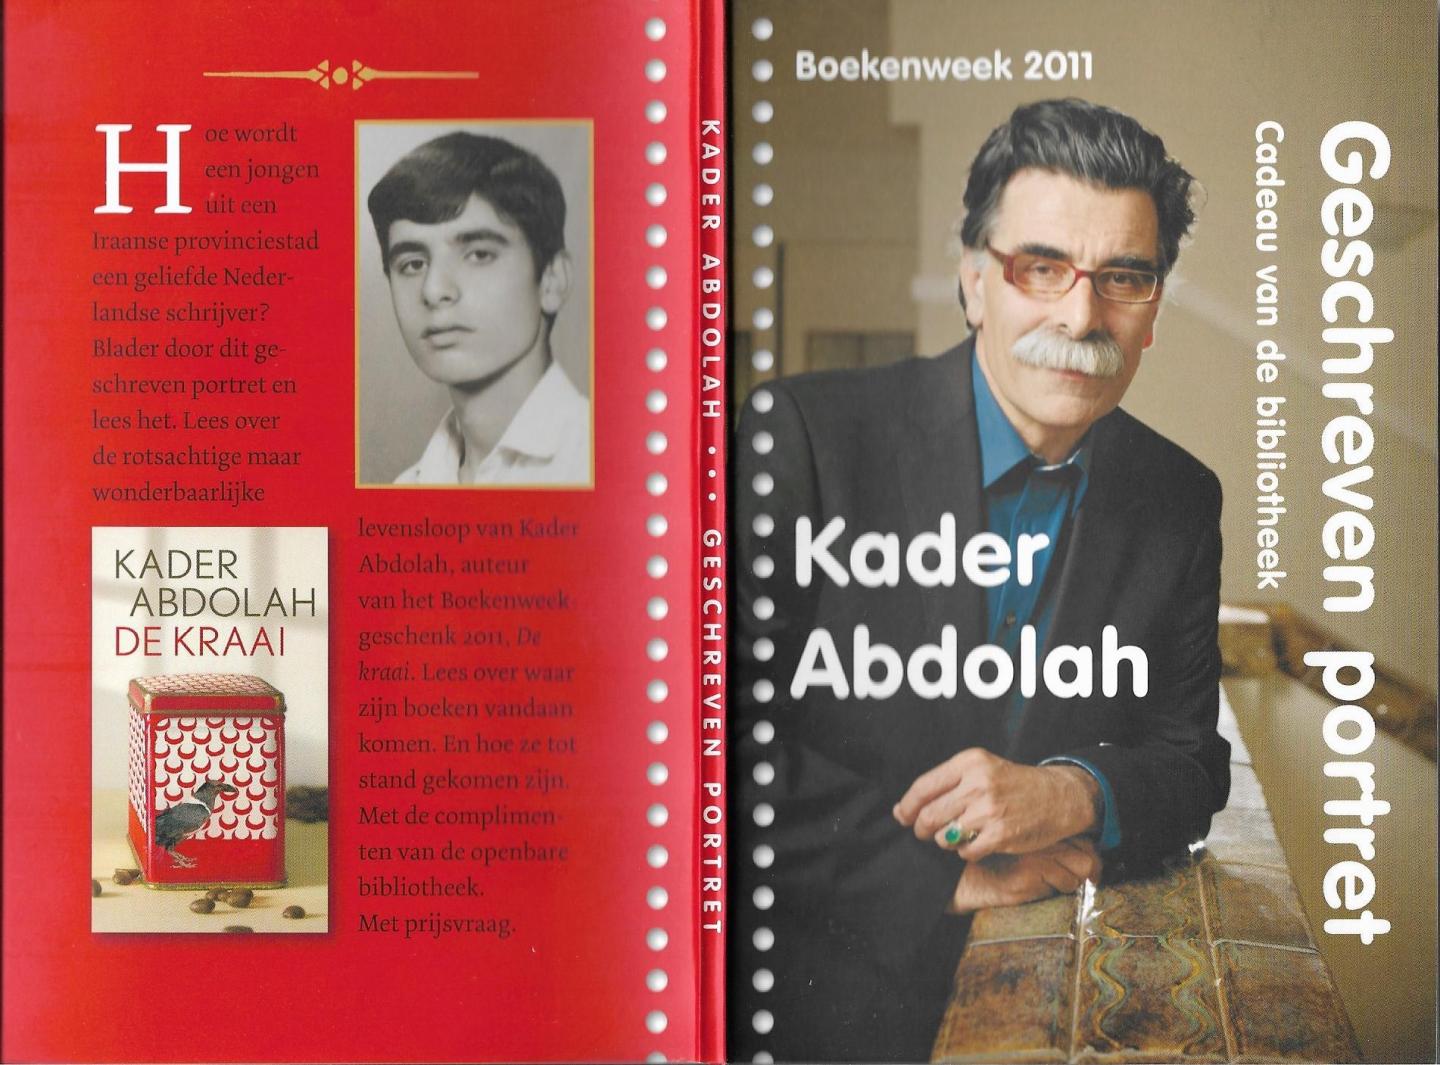  - Boekenweek CV 2011, cadeau van de bibliotheek, Kader Abdolah.